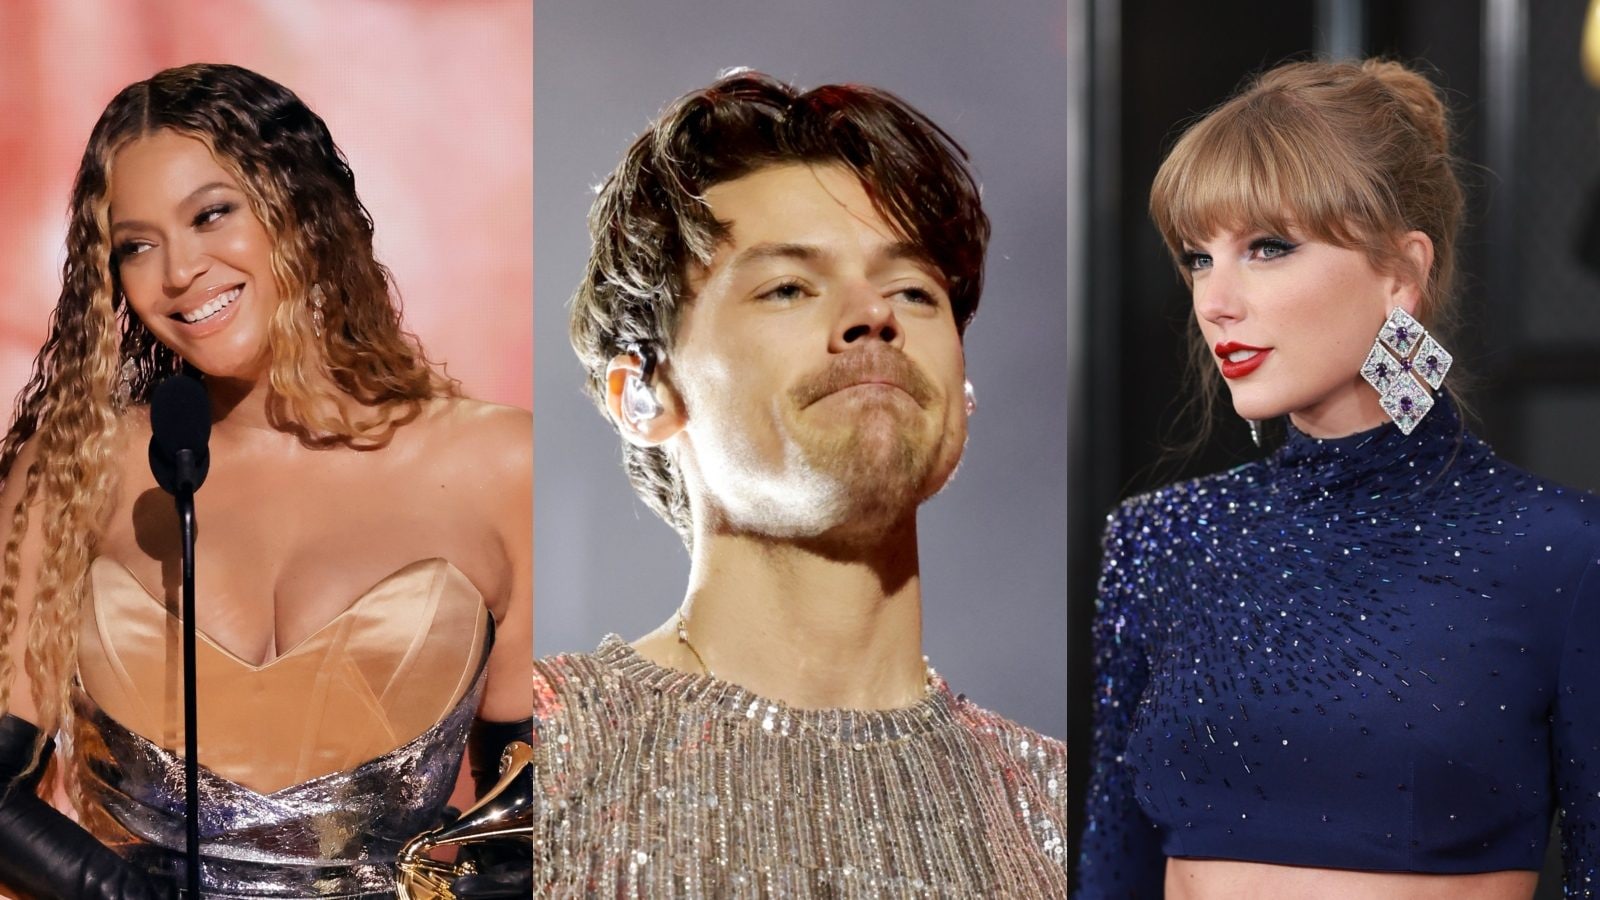 Grammy Nominations 2021 List: BTS, Harry Styles, Taylor Swift, Dua